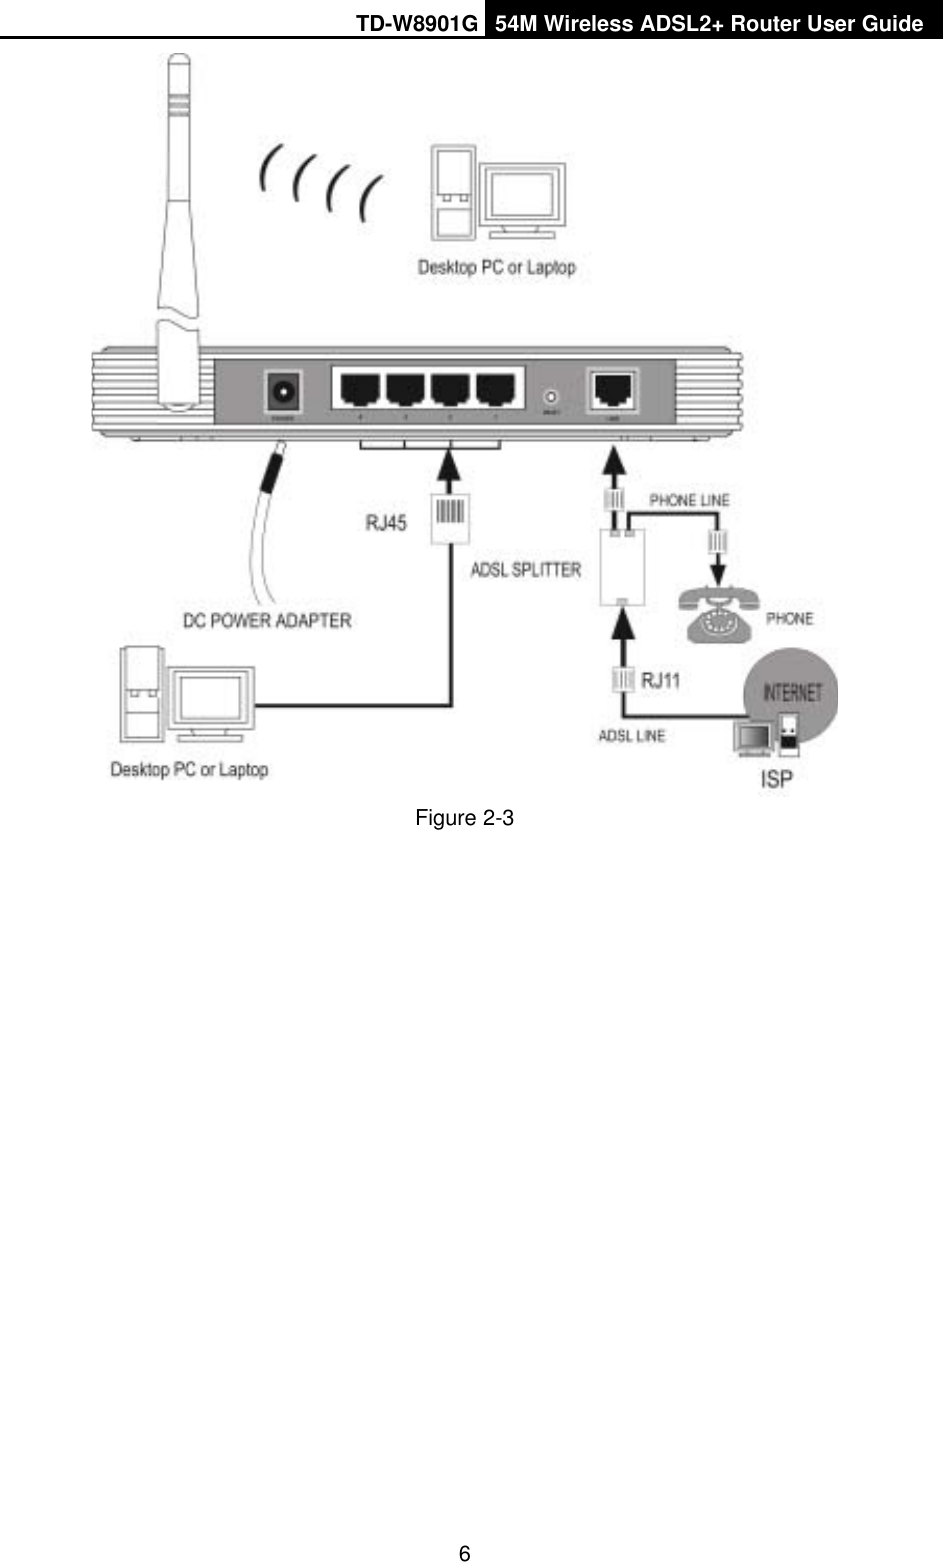 TD-W8901G 54M Wireless ADSL2+ Router User Guide6Figure 2-3